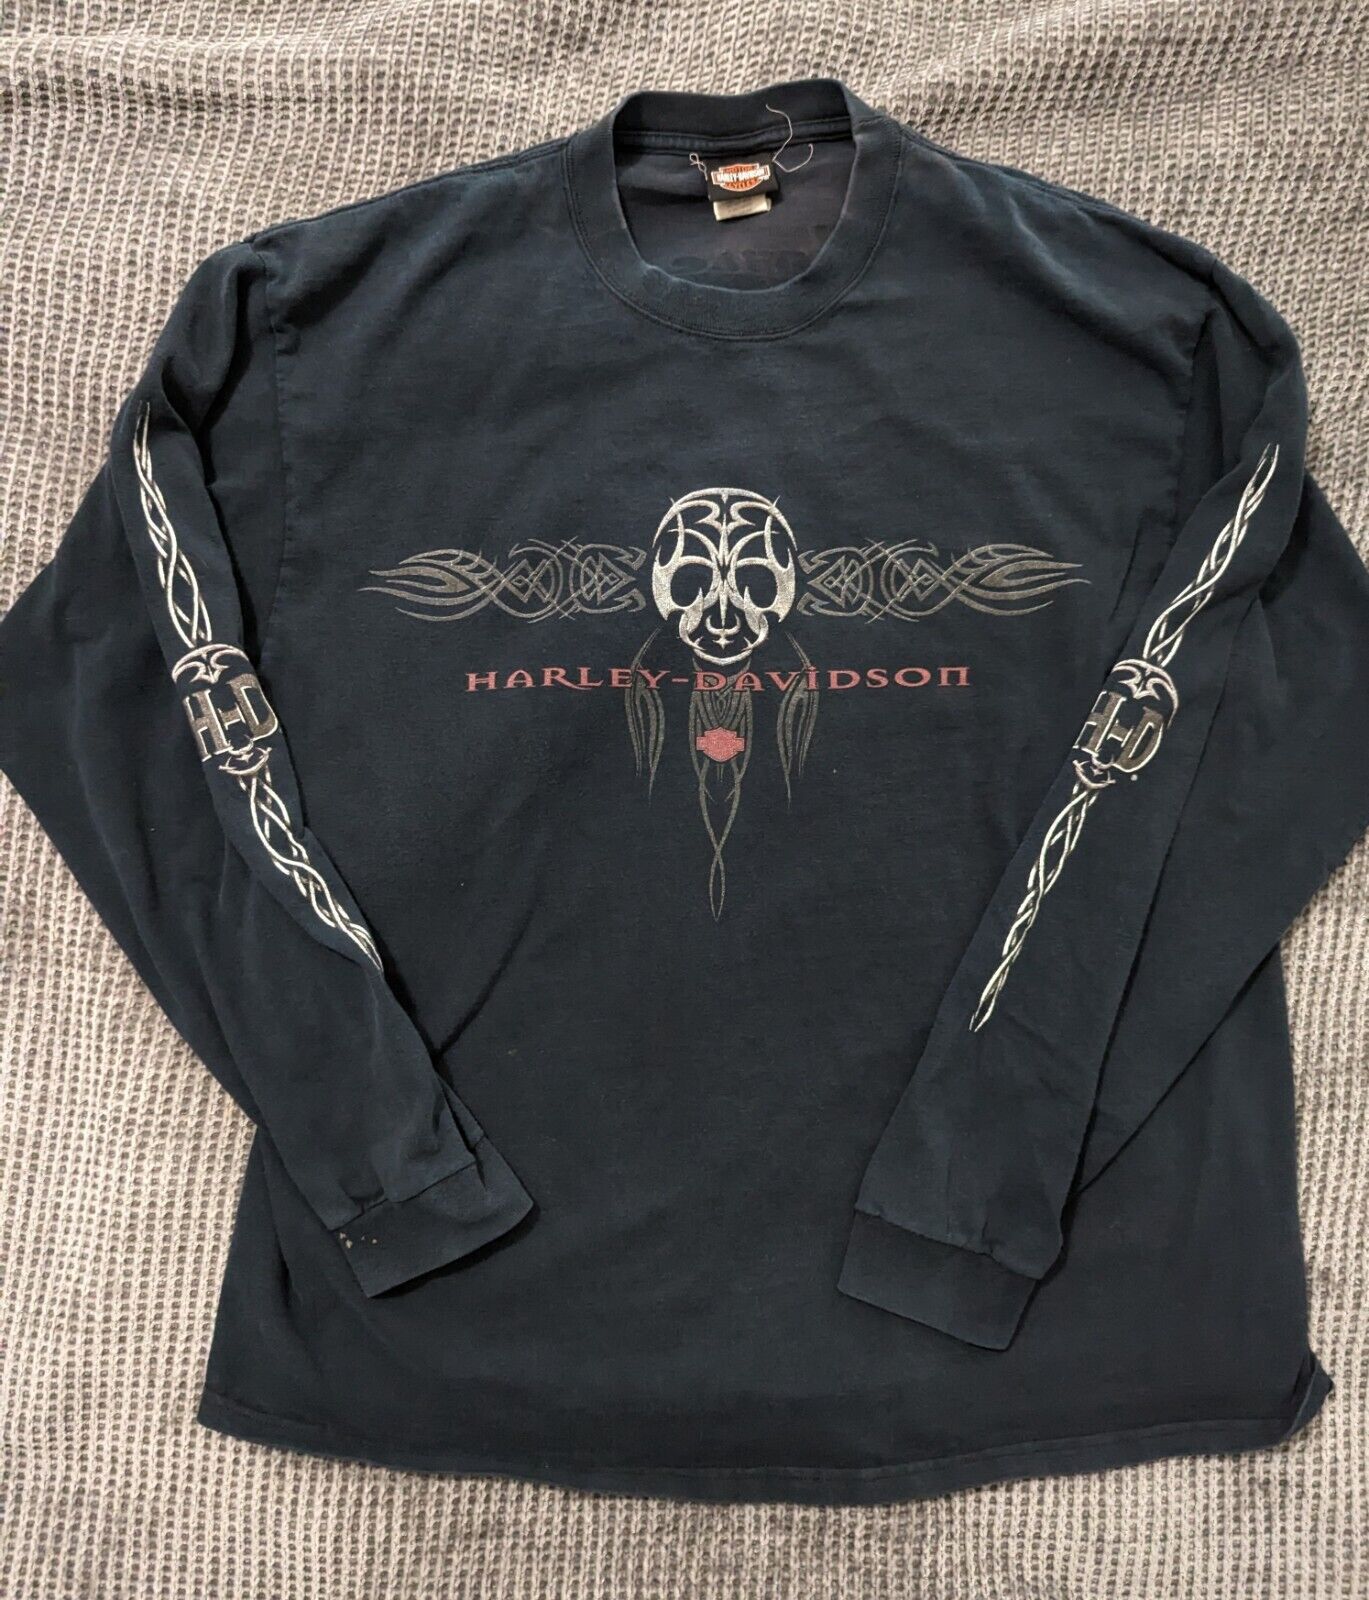 Vintage 2001 Harley Davidson Long Sleeve Shirt Sz XL